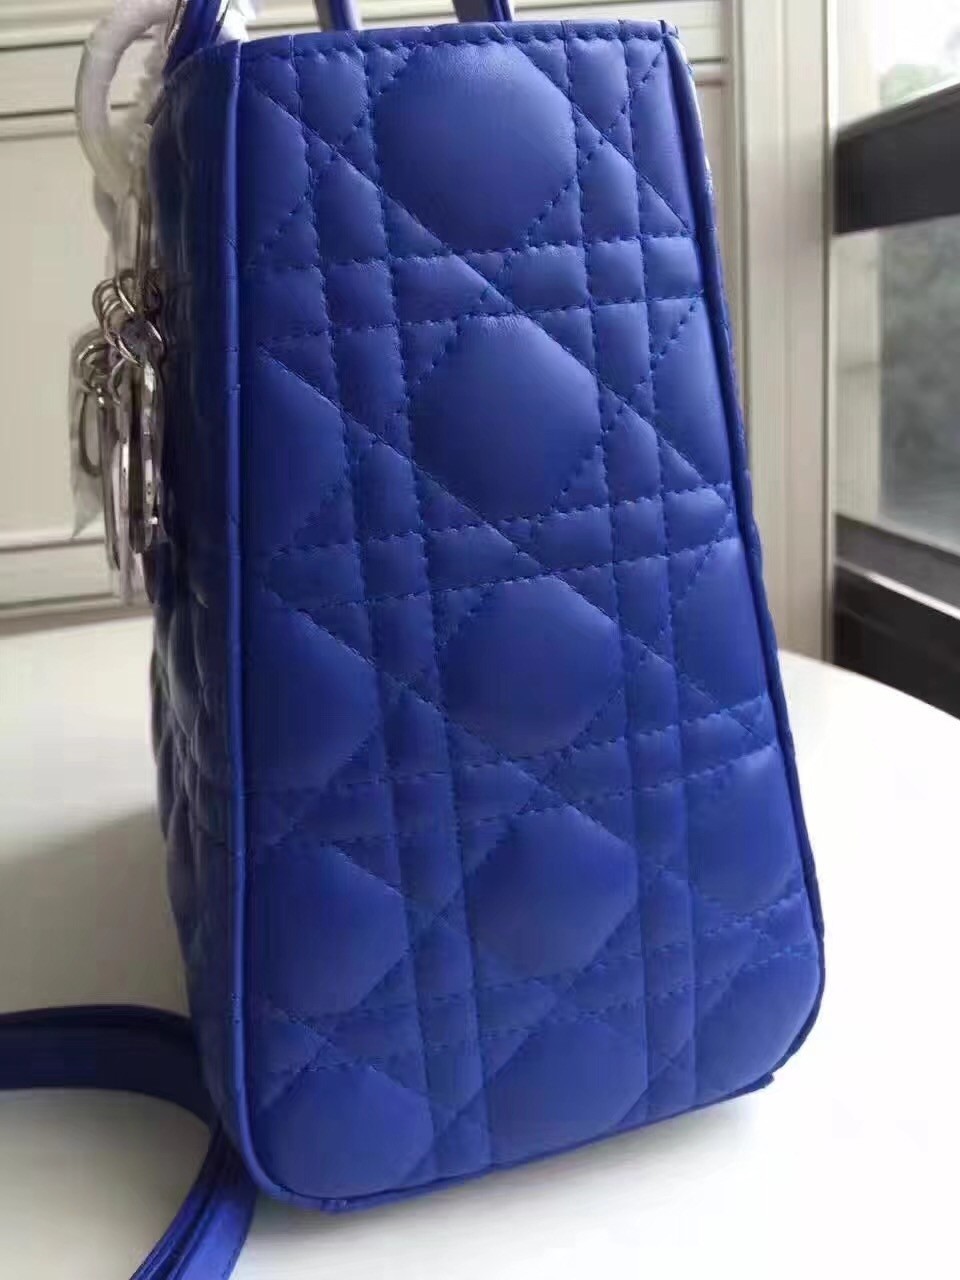 Dior Medium Lady Dior Bag In Blue Lambskin 190